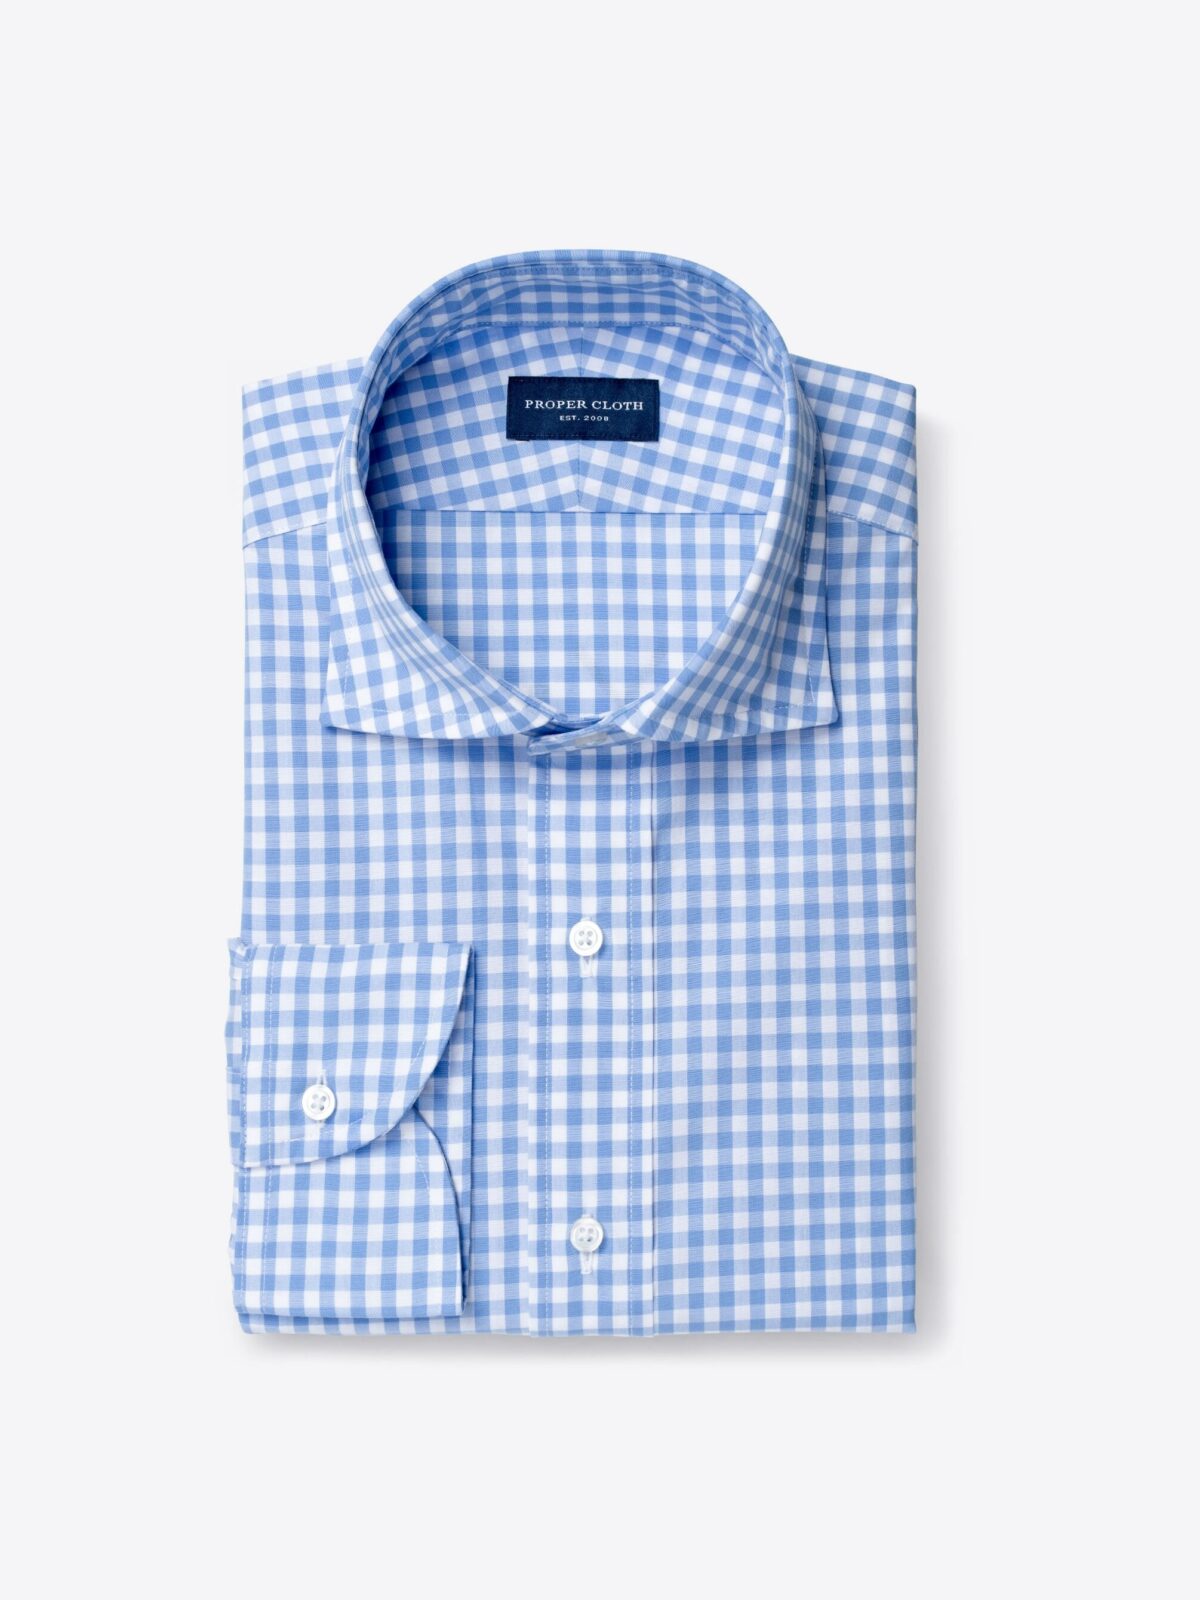 Light Blue Medium Gingham Broadcloth Shirt by Proper Cloth